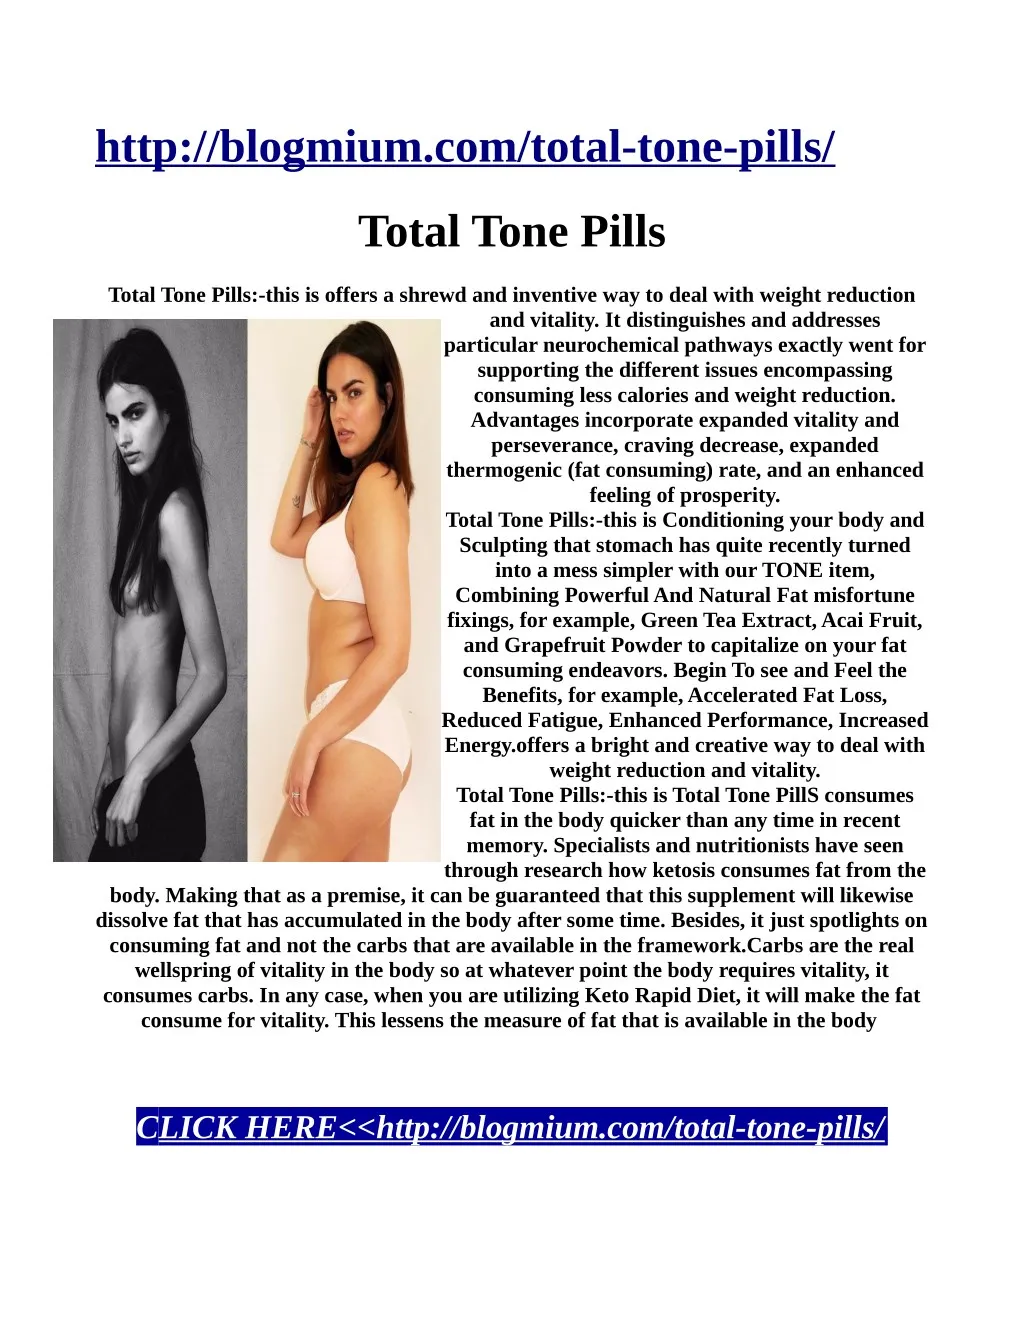 http blogmium com total tone pills